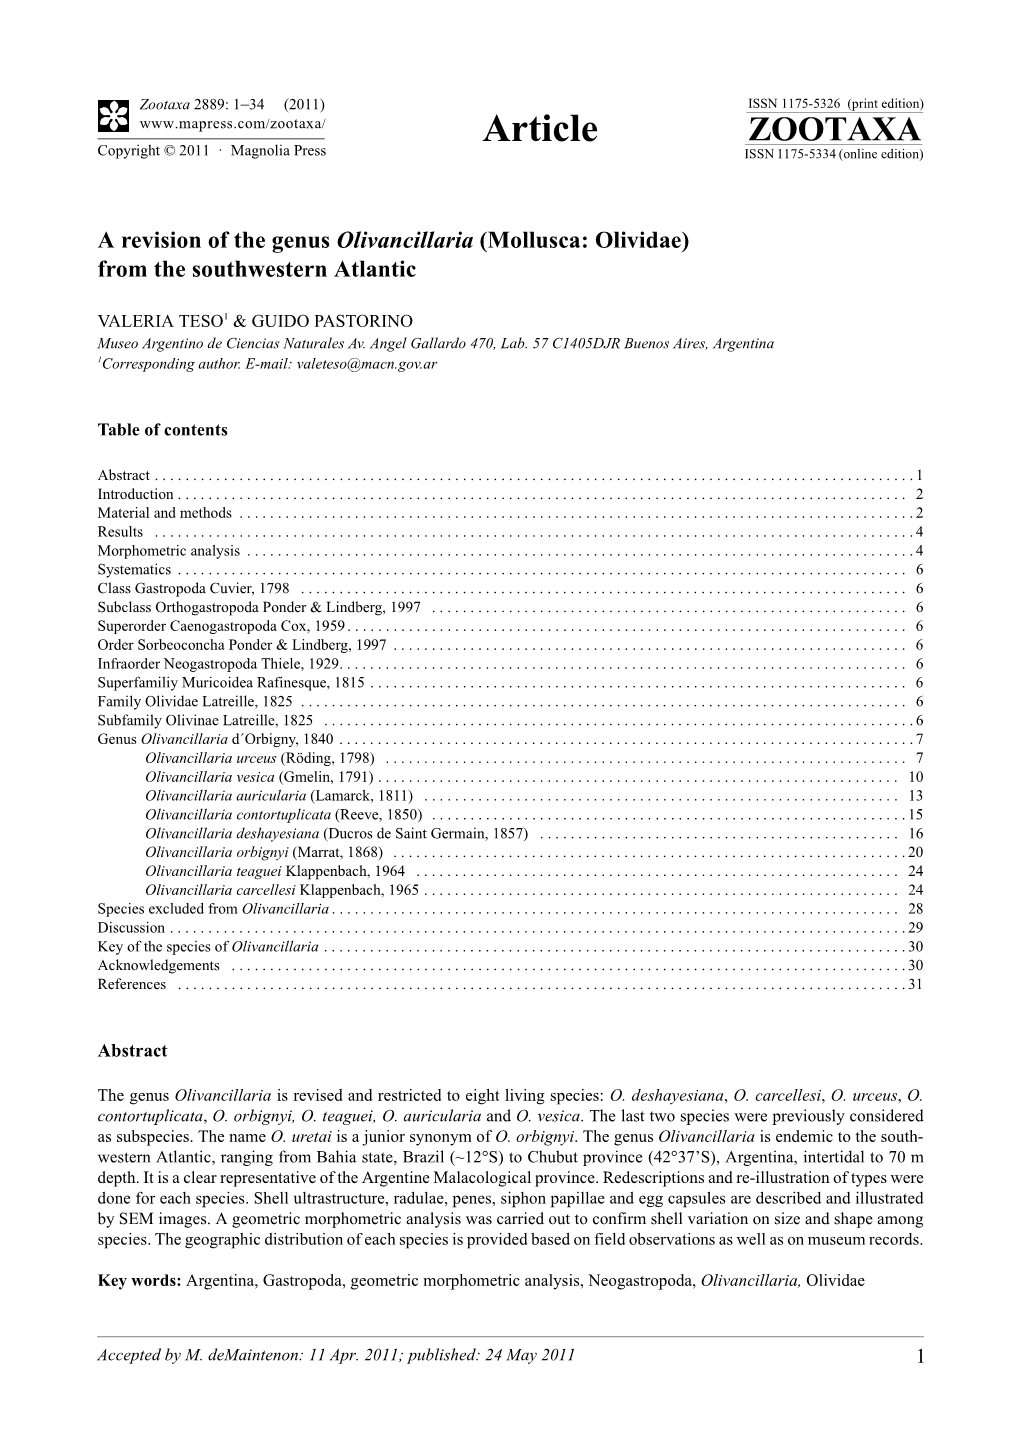 A Revision of the Genus Olivancillaria (Mollusca: Olividae) from the Southwestern Atlantic